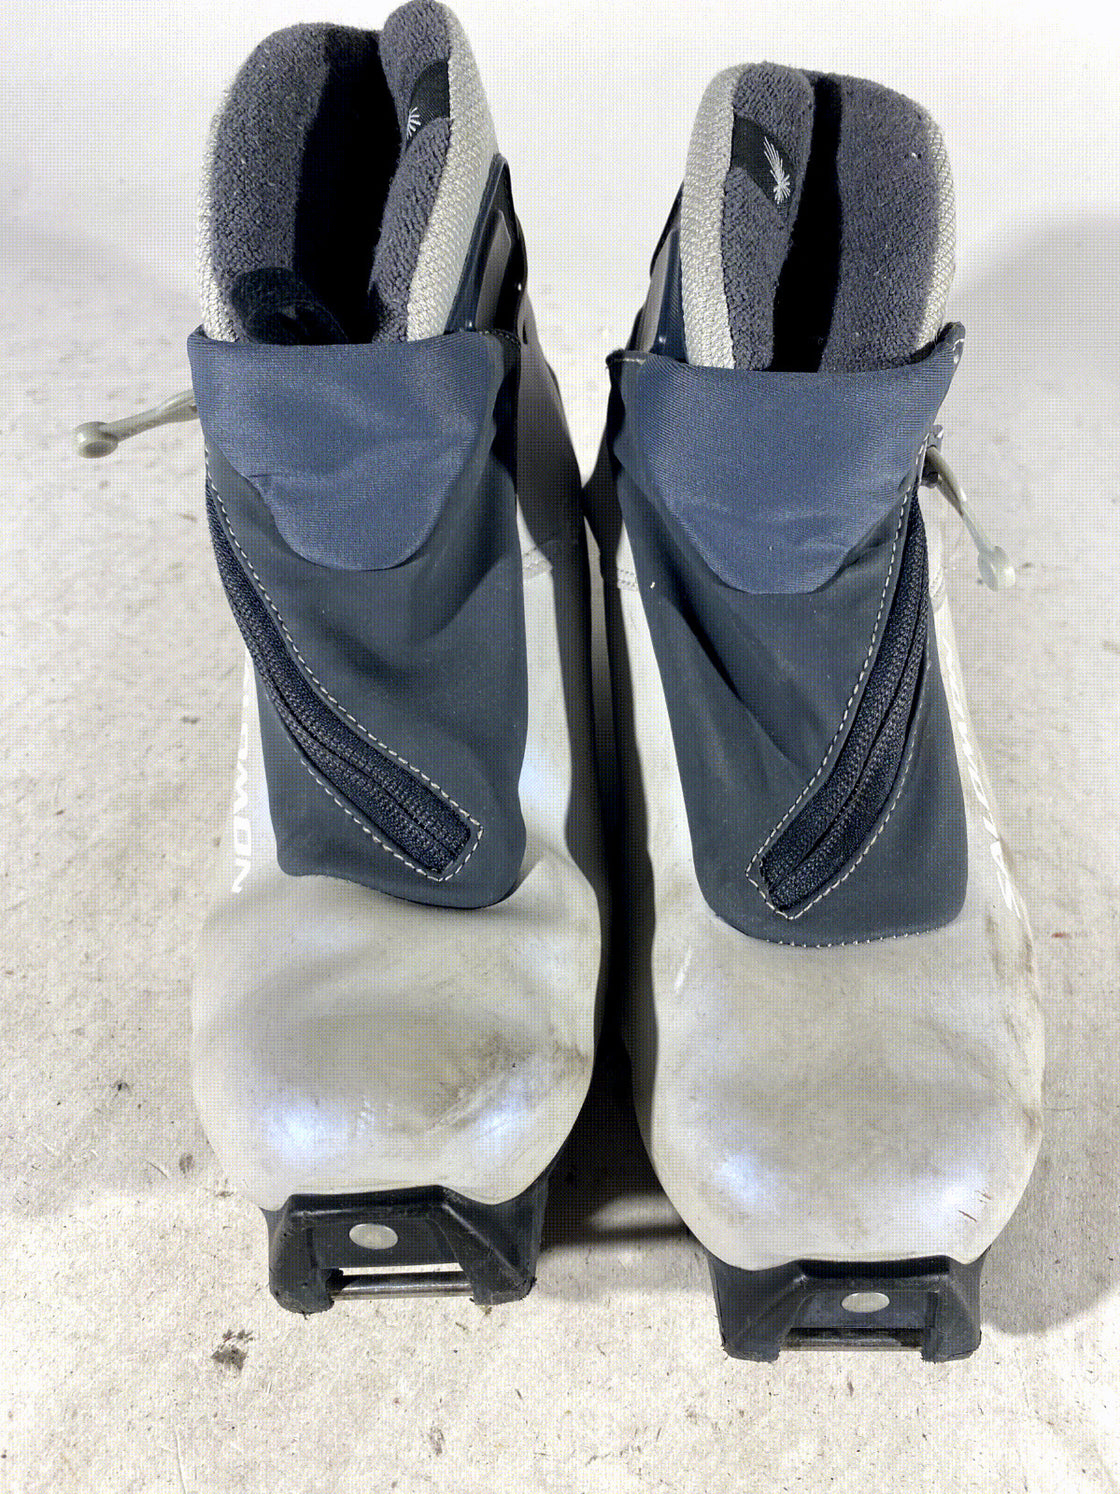 Salomon Nordic Cross Country Ski Boots Size EU36 2/3 US5.5 for SNS Profil